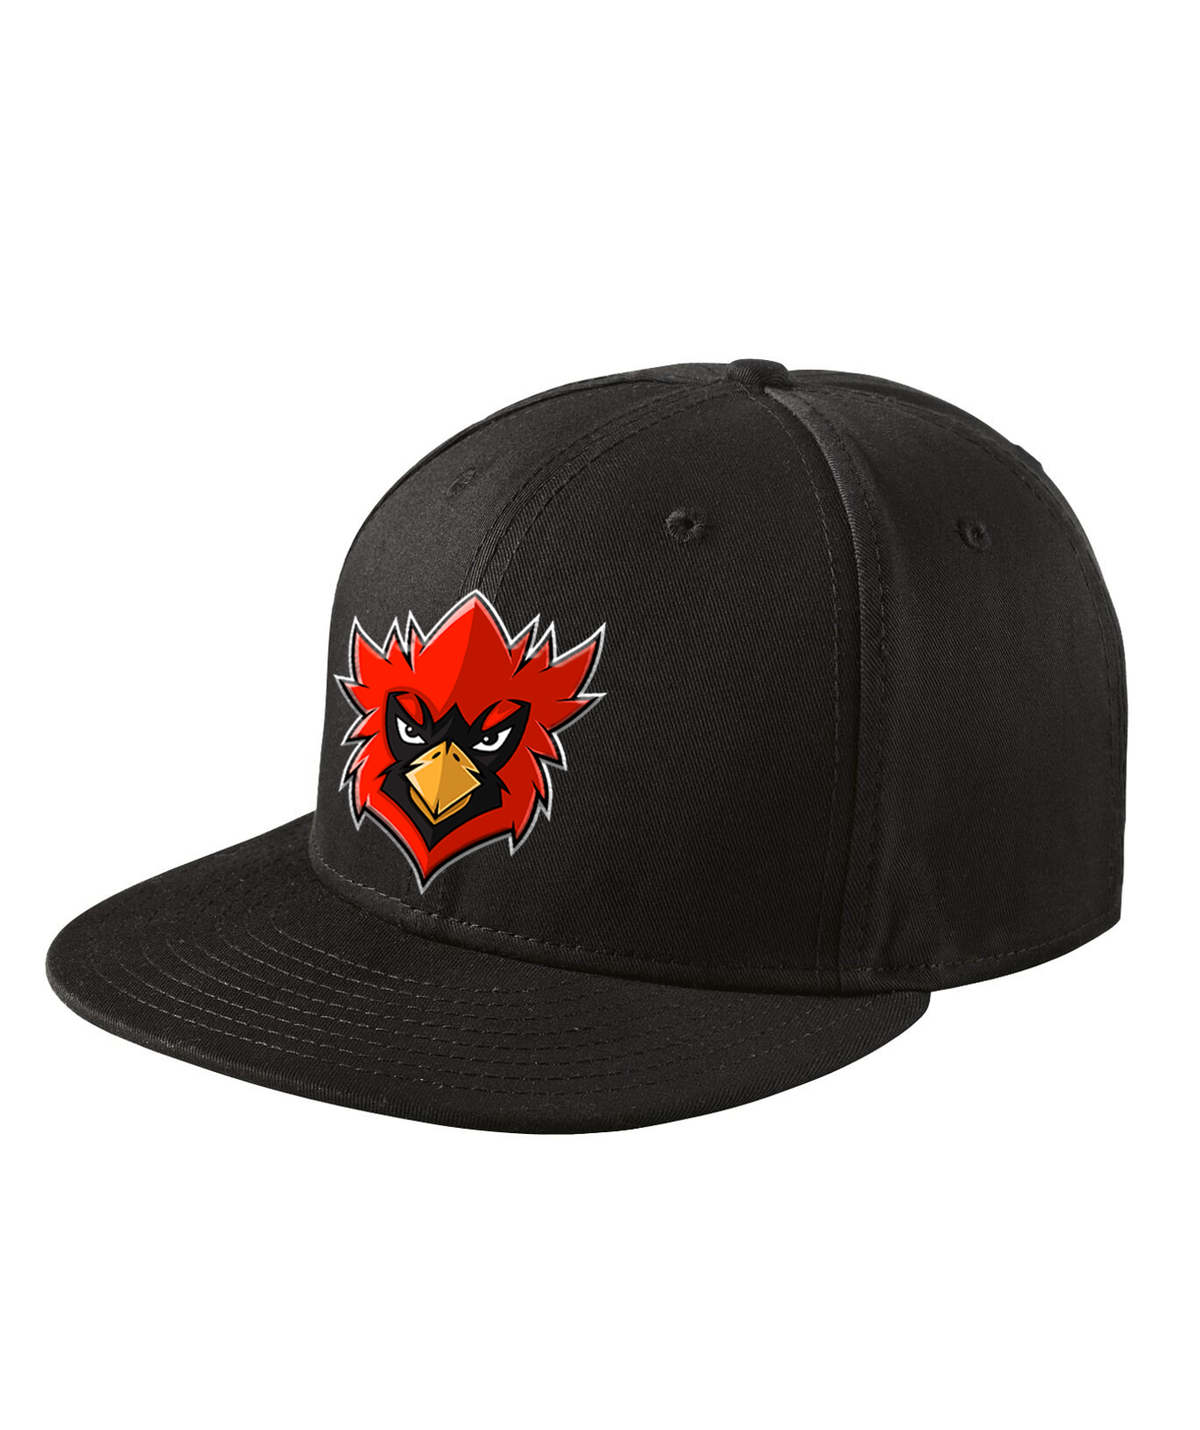 Innisfil Cardinals New Era 9FIFTY Snapback Cap - Black